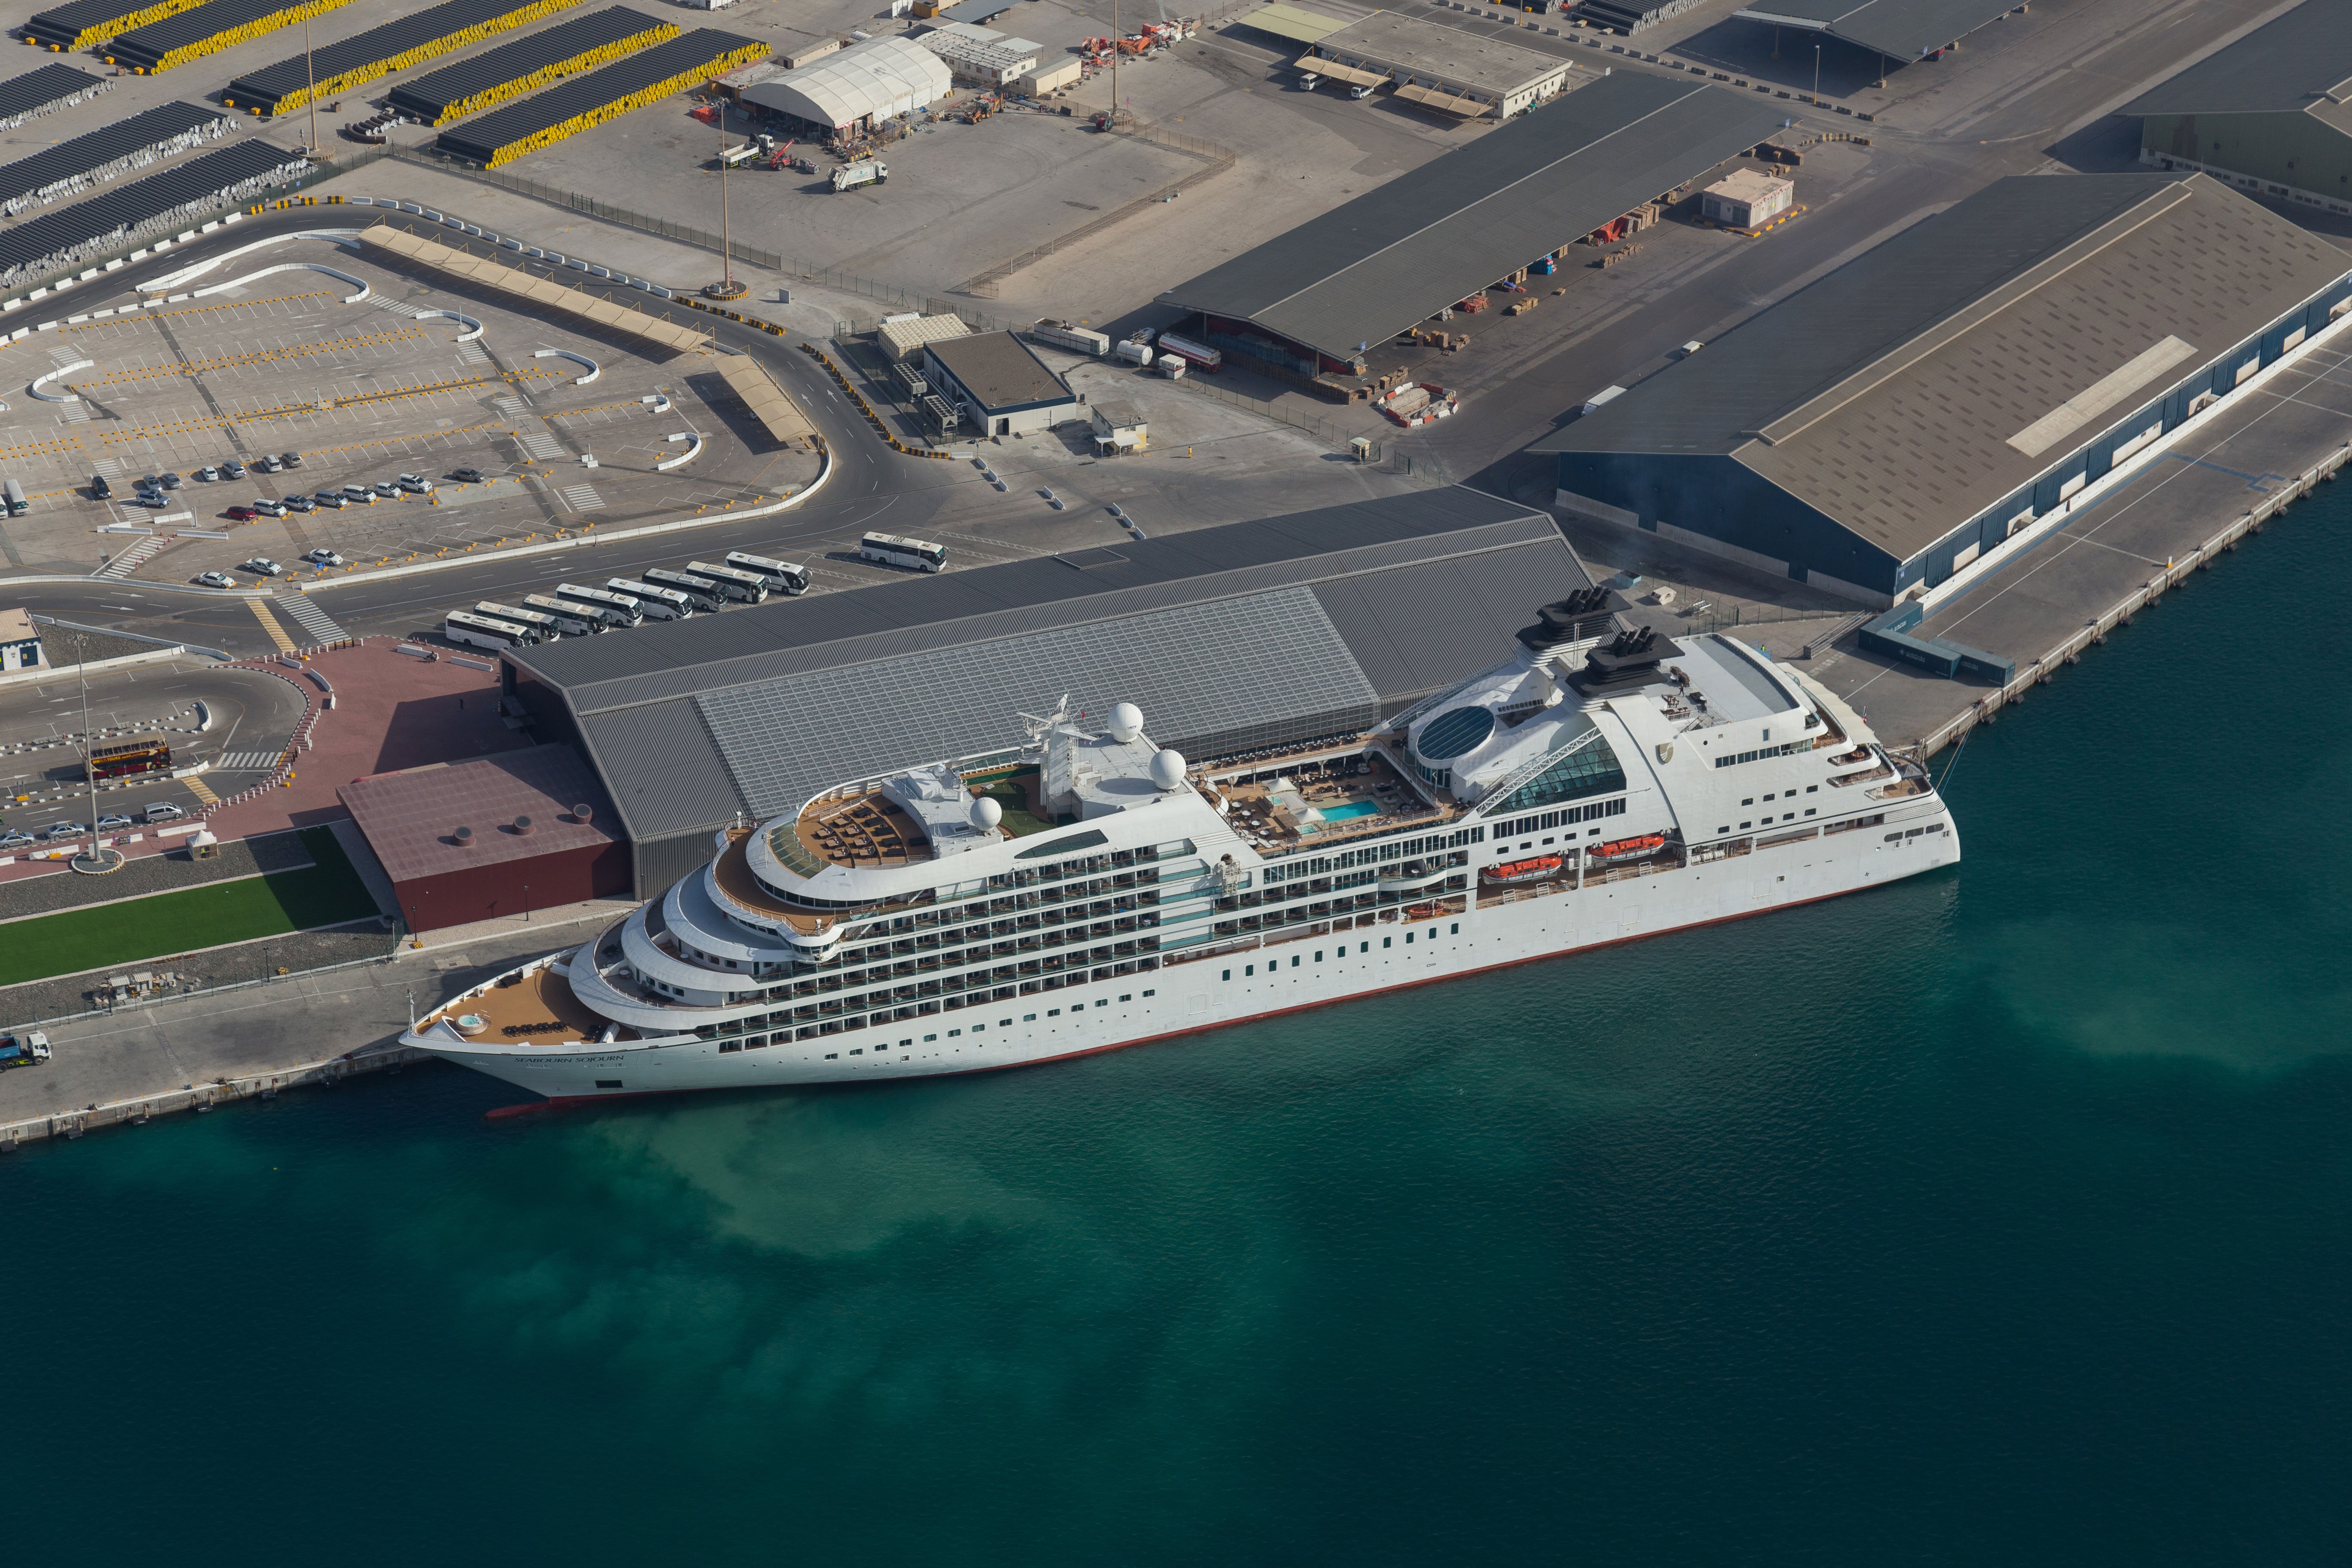 Bird's eye view of a cruise ship docked in Abu Dhabi